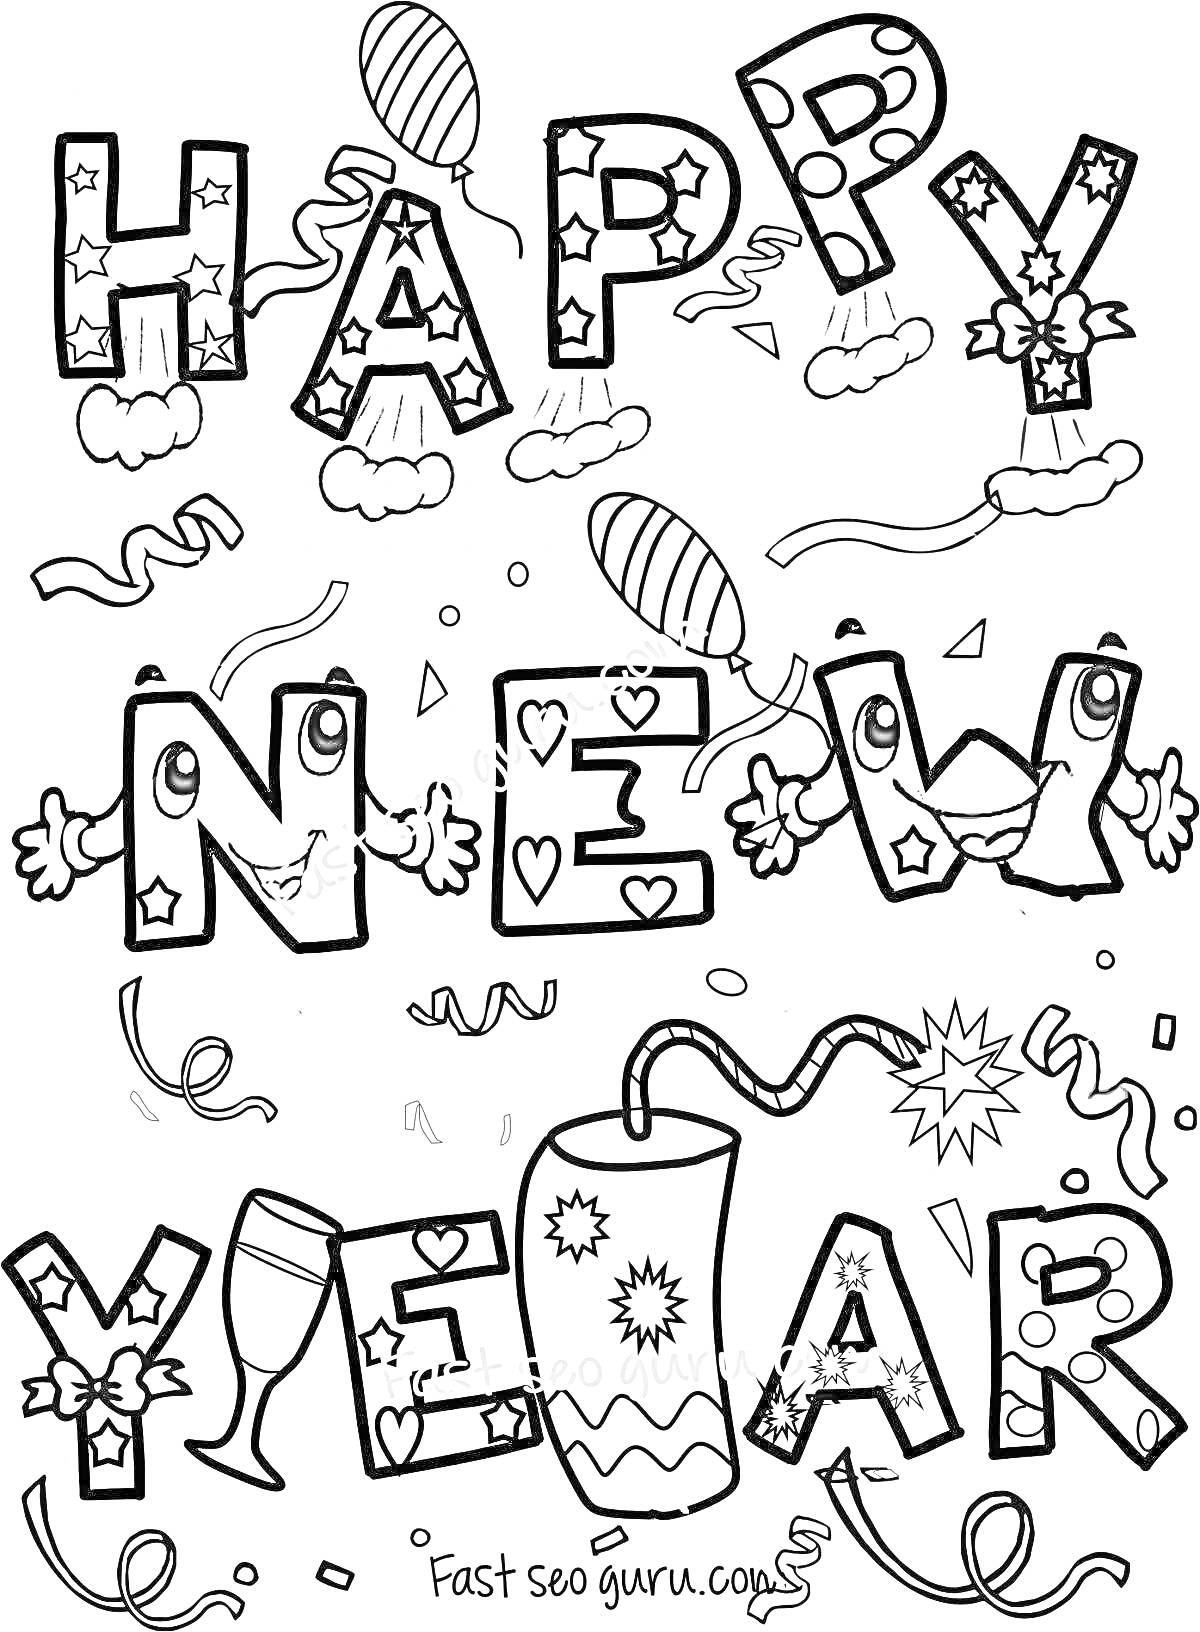 Раскраска Happy New Year с праздничными элементами (мороженое, хлопушки, звездочки, шарики, конфетти, бокал с шампанским, бантики, сердечки)